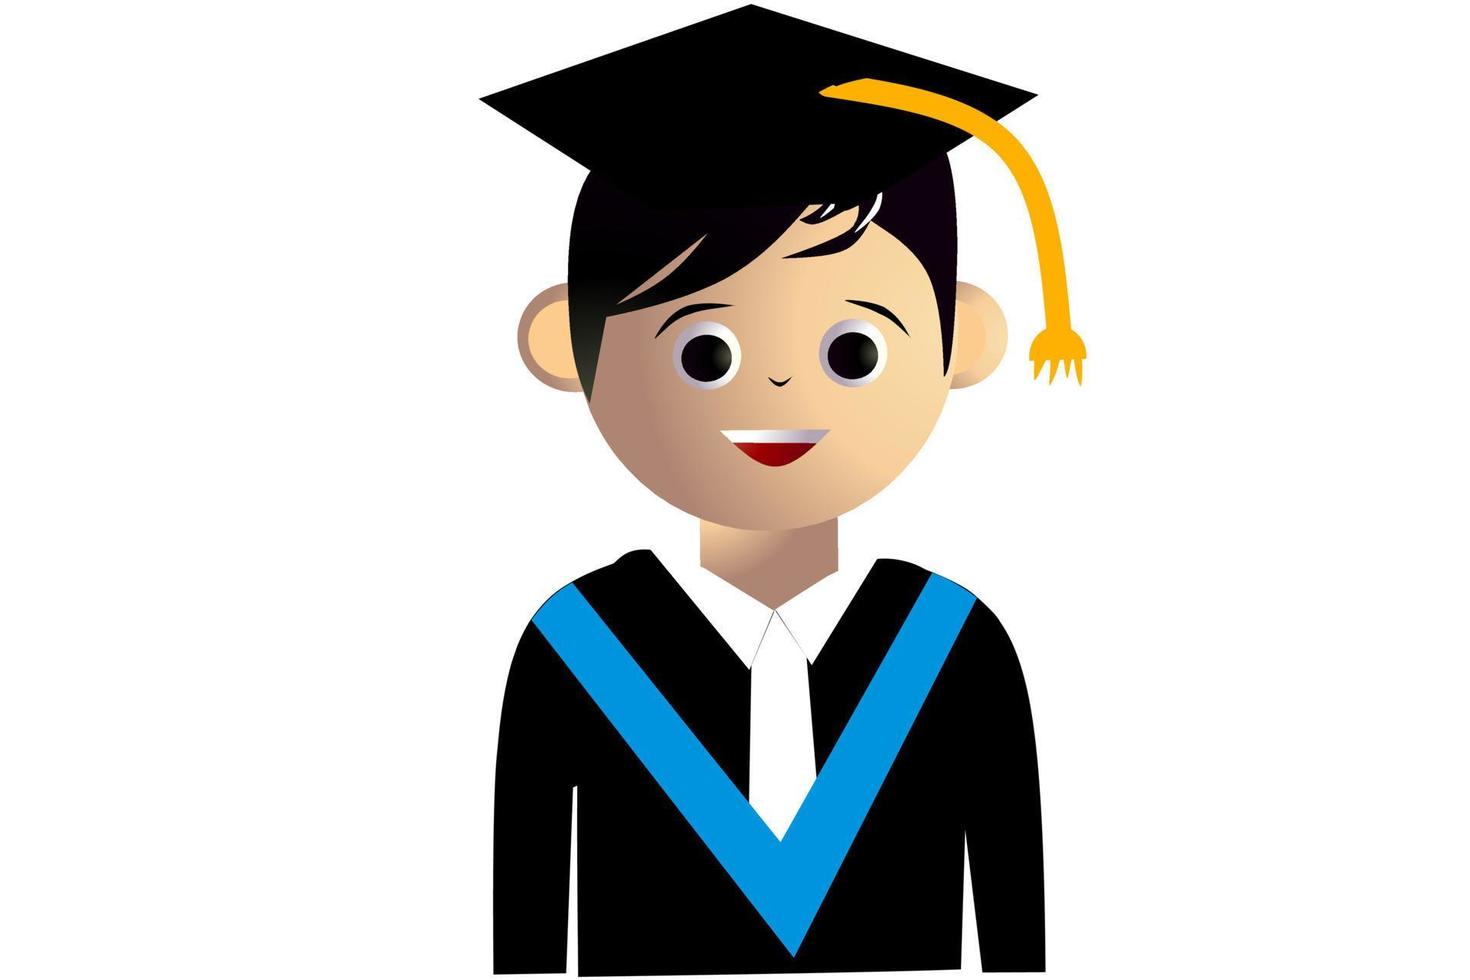 Graduate Student cartoon avatar isolated on white background. Vector illustration.